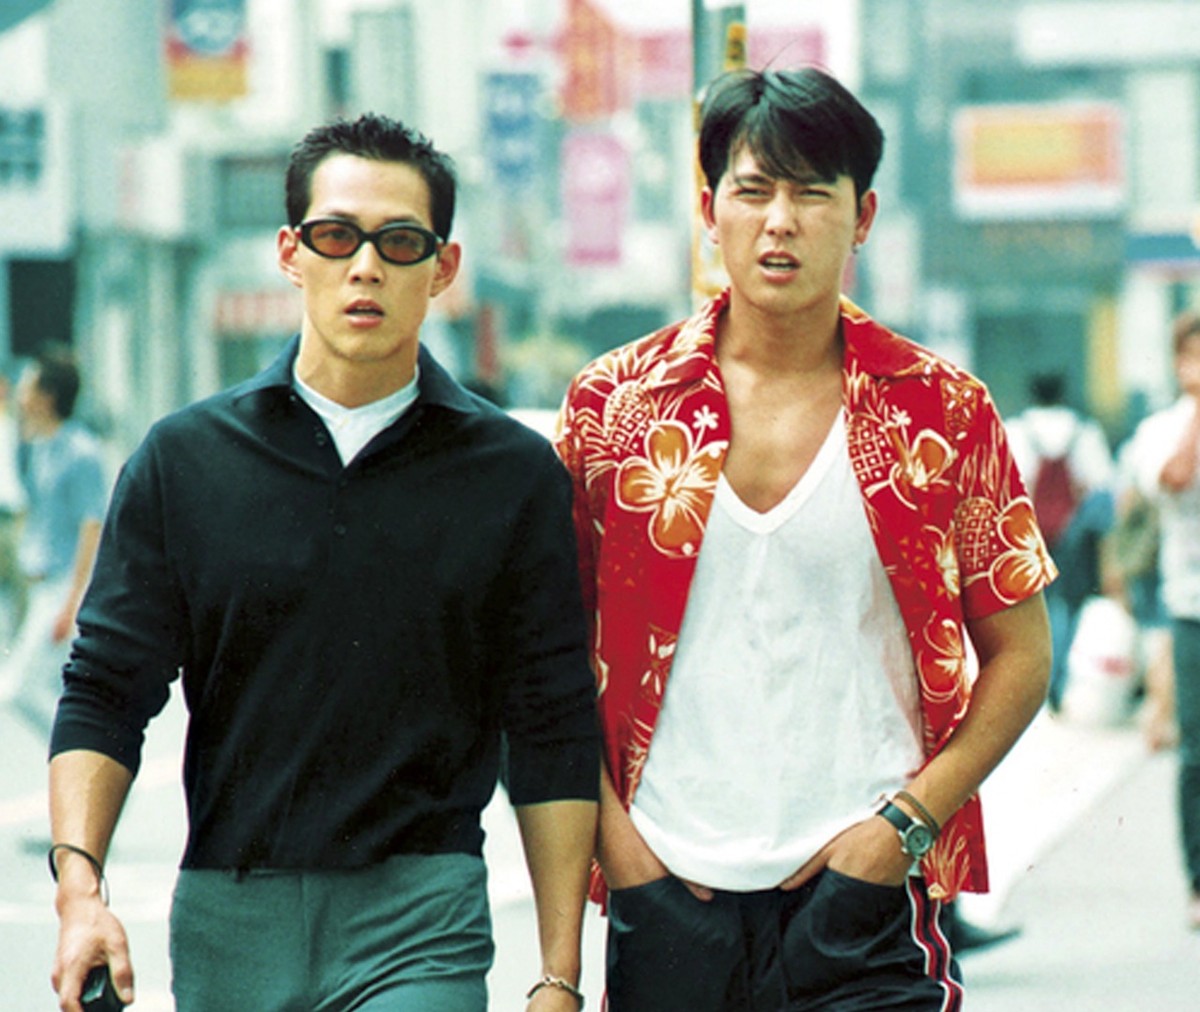 Korean flower boys: the origin of the 1990s fashion trend